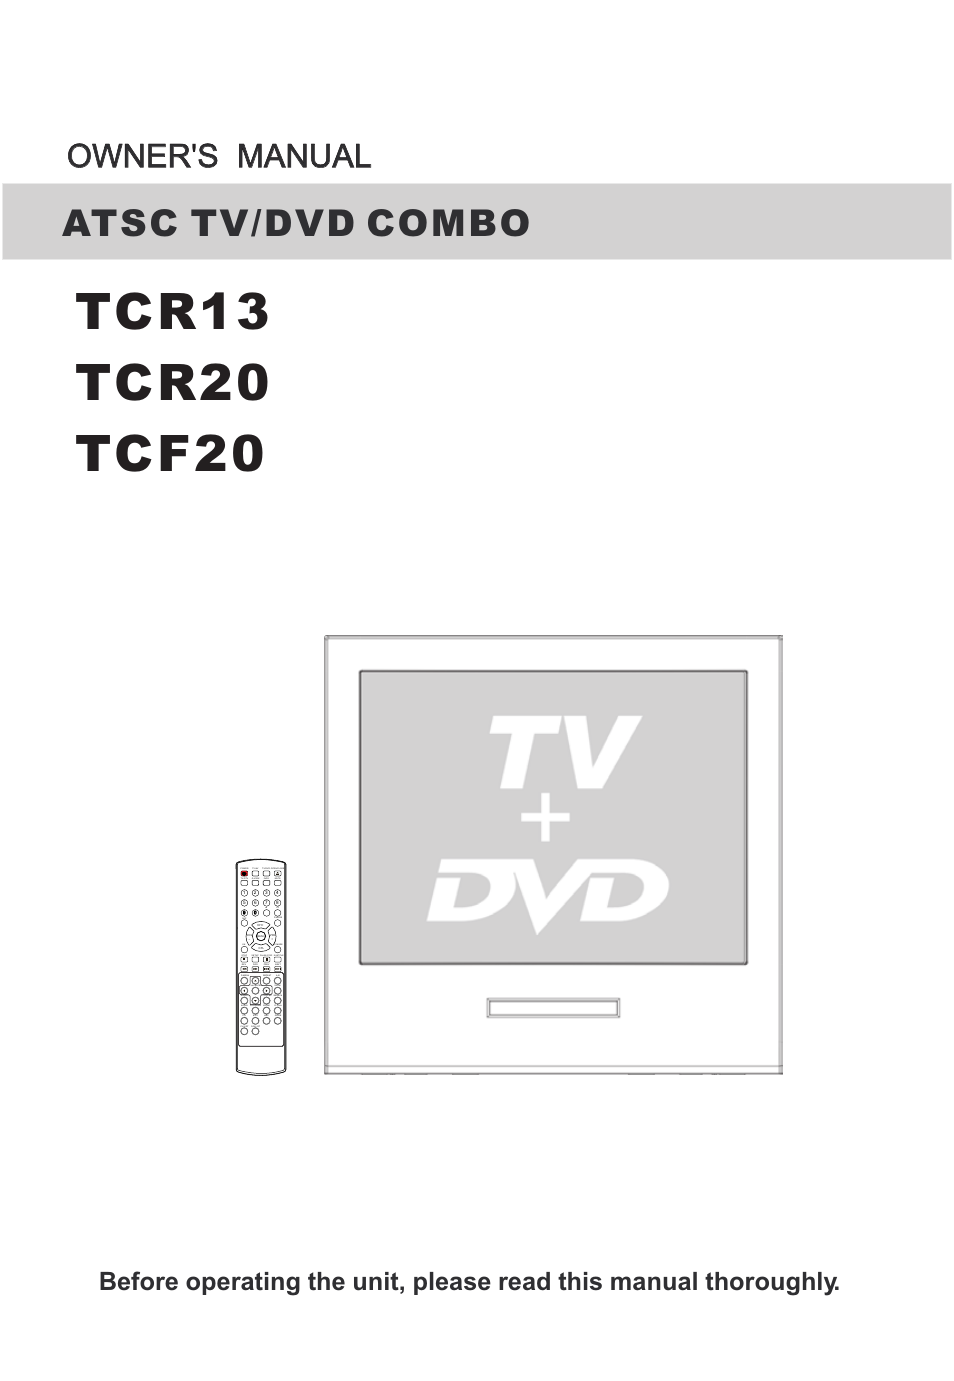 TCR20